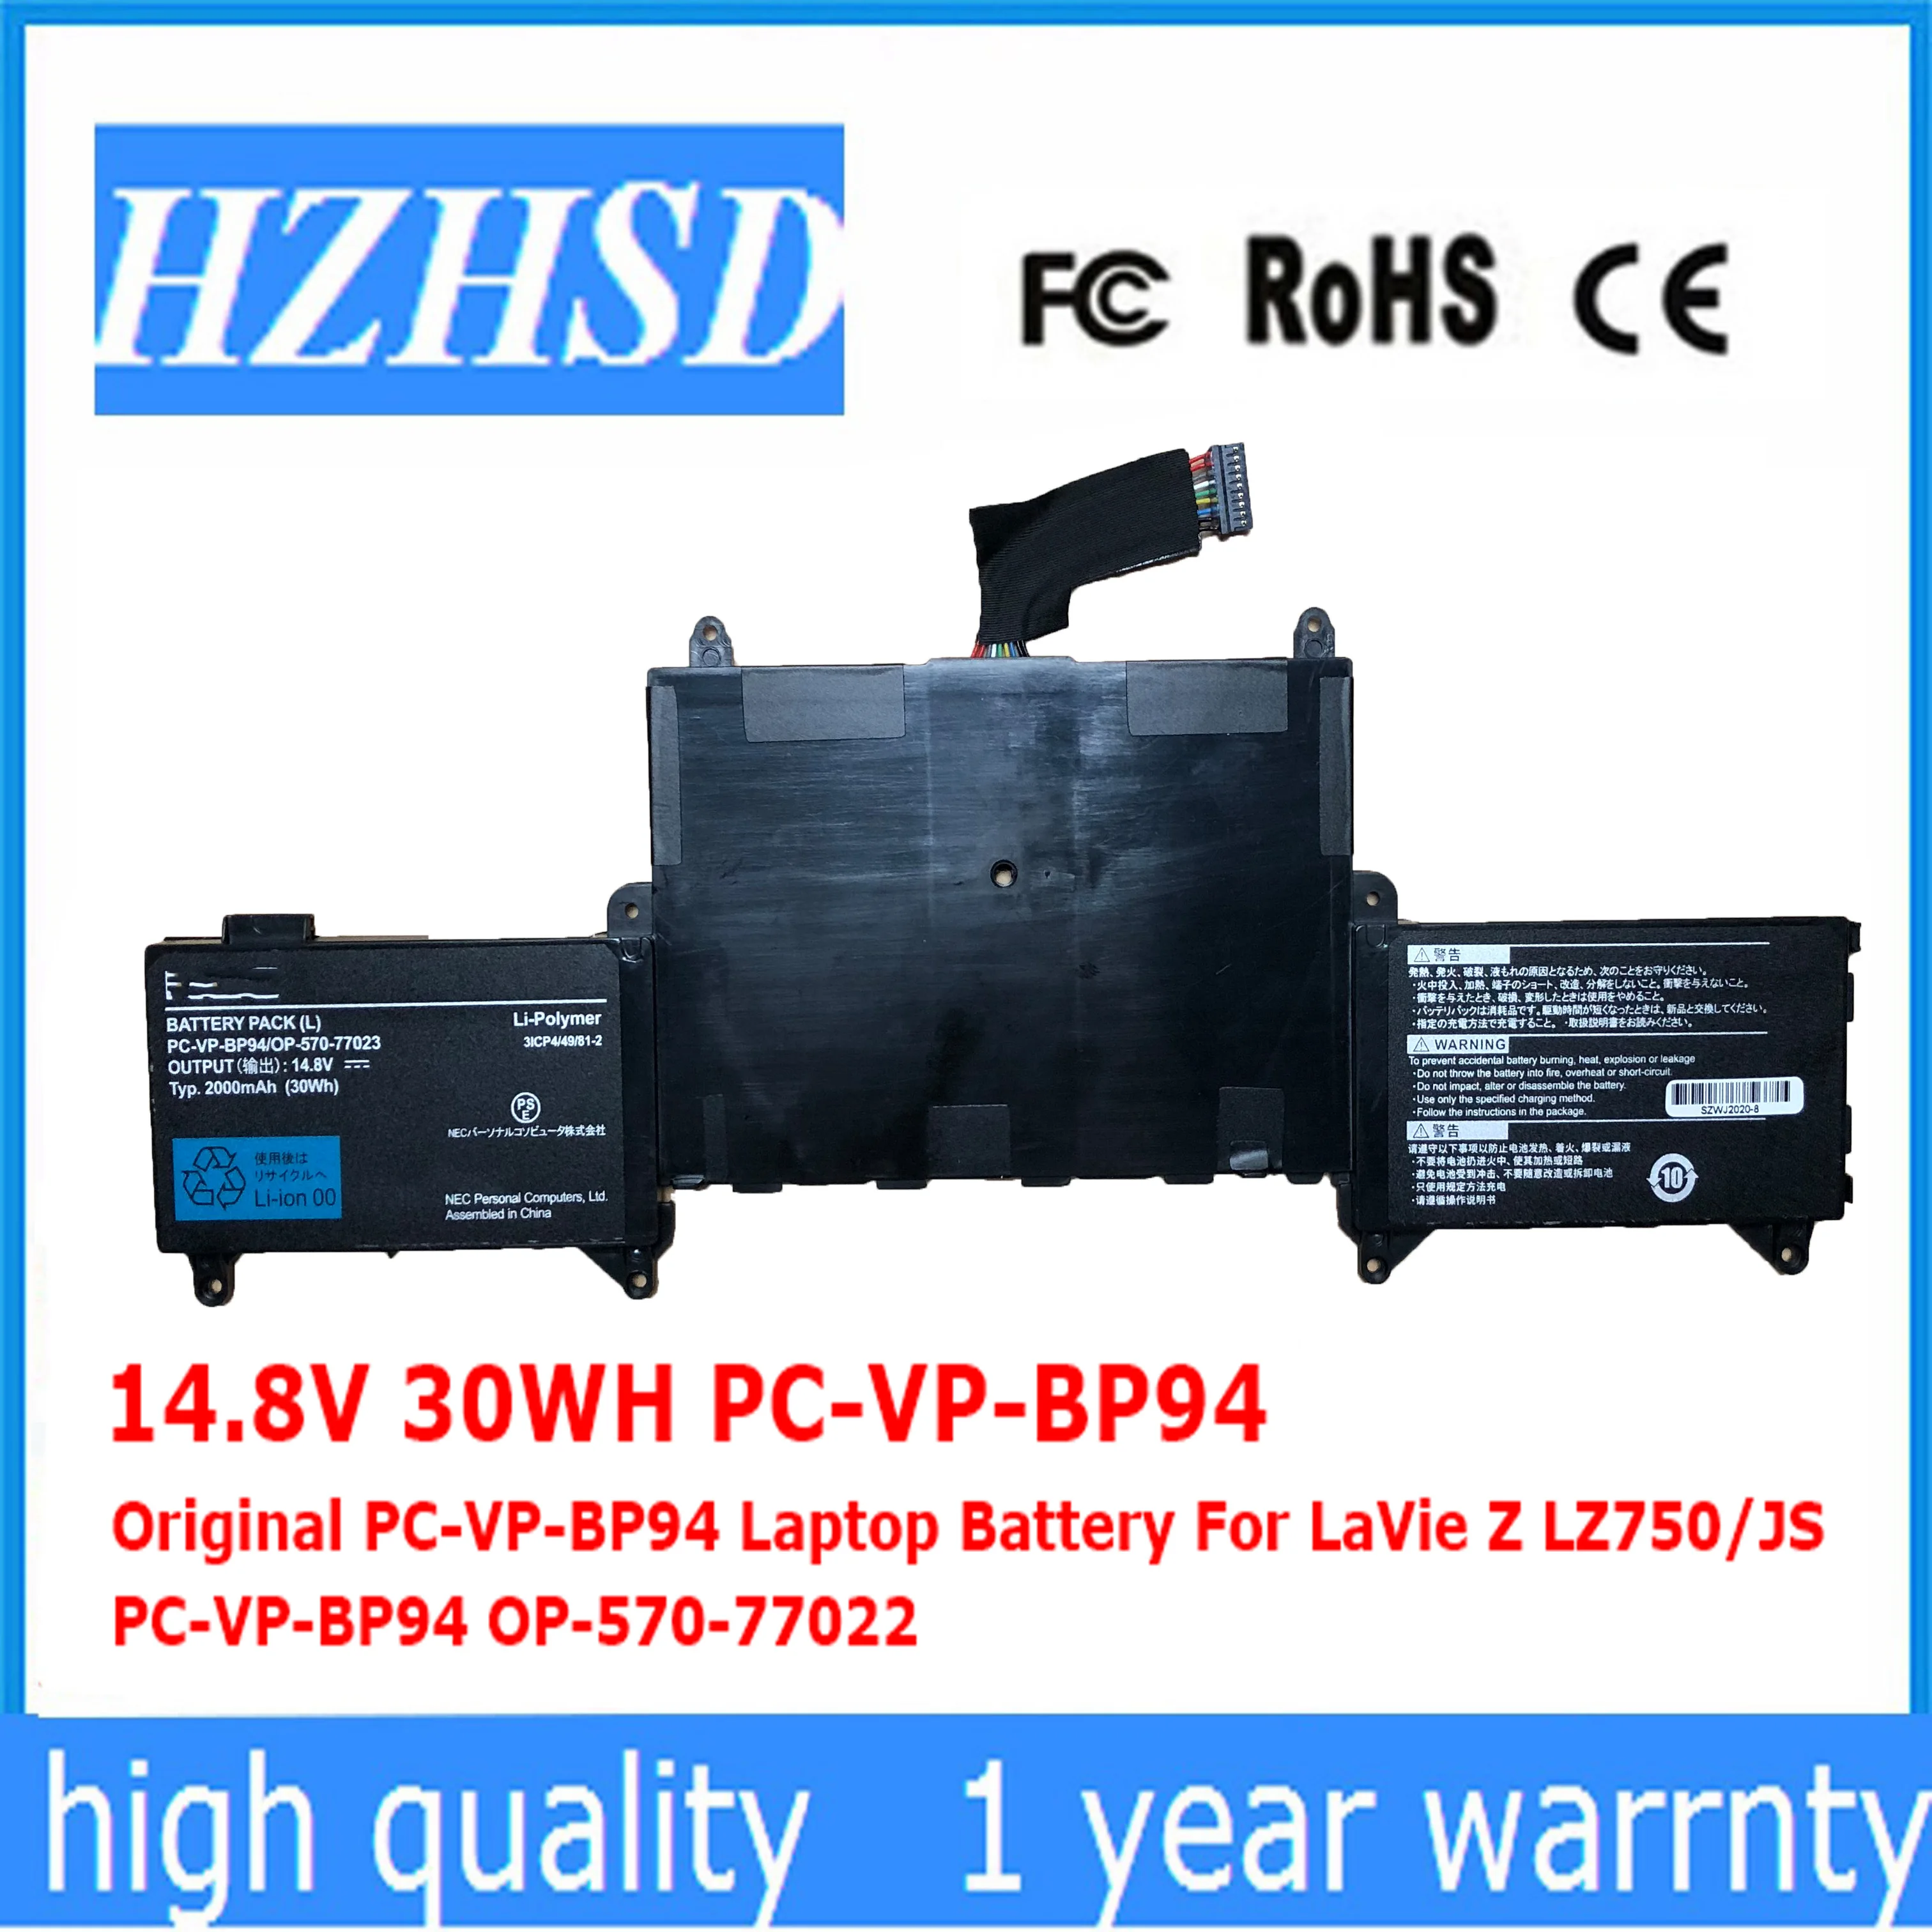 14.8 V 30WH Oprindelige PC-VP-BP94 Laptop Batteri Til LaVie Z LZ750/JS PC-VP-BP94 OP-570-77022